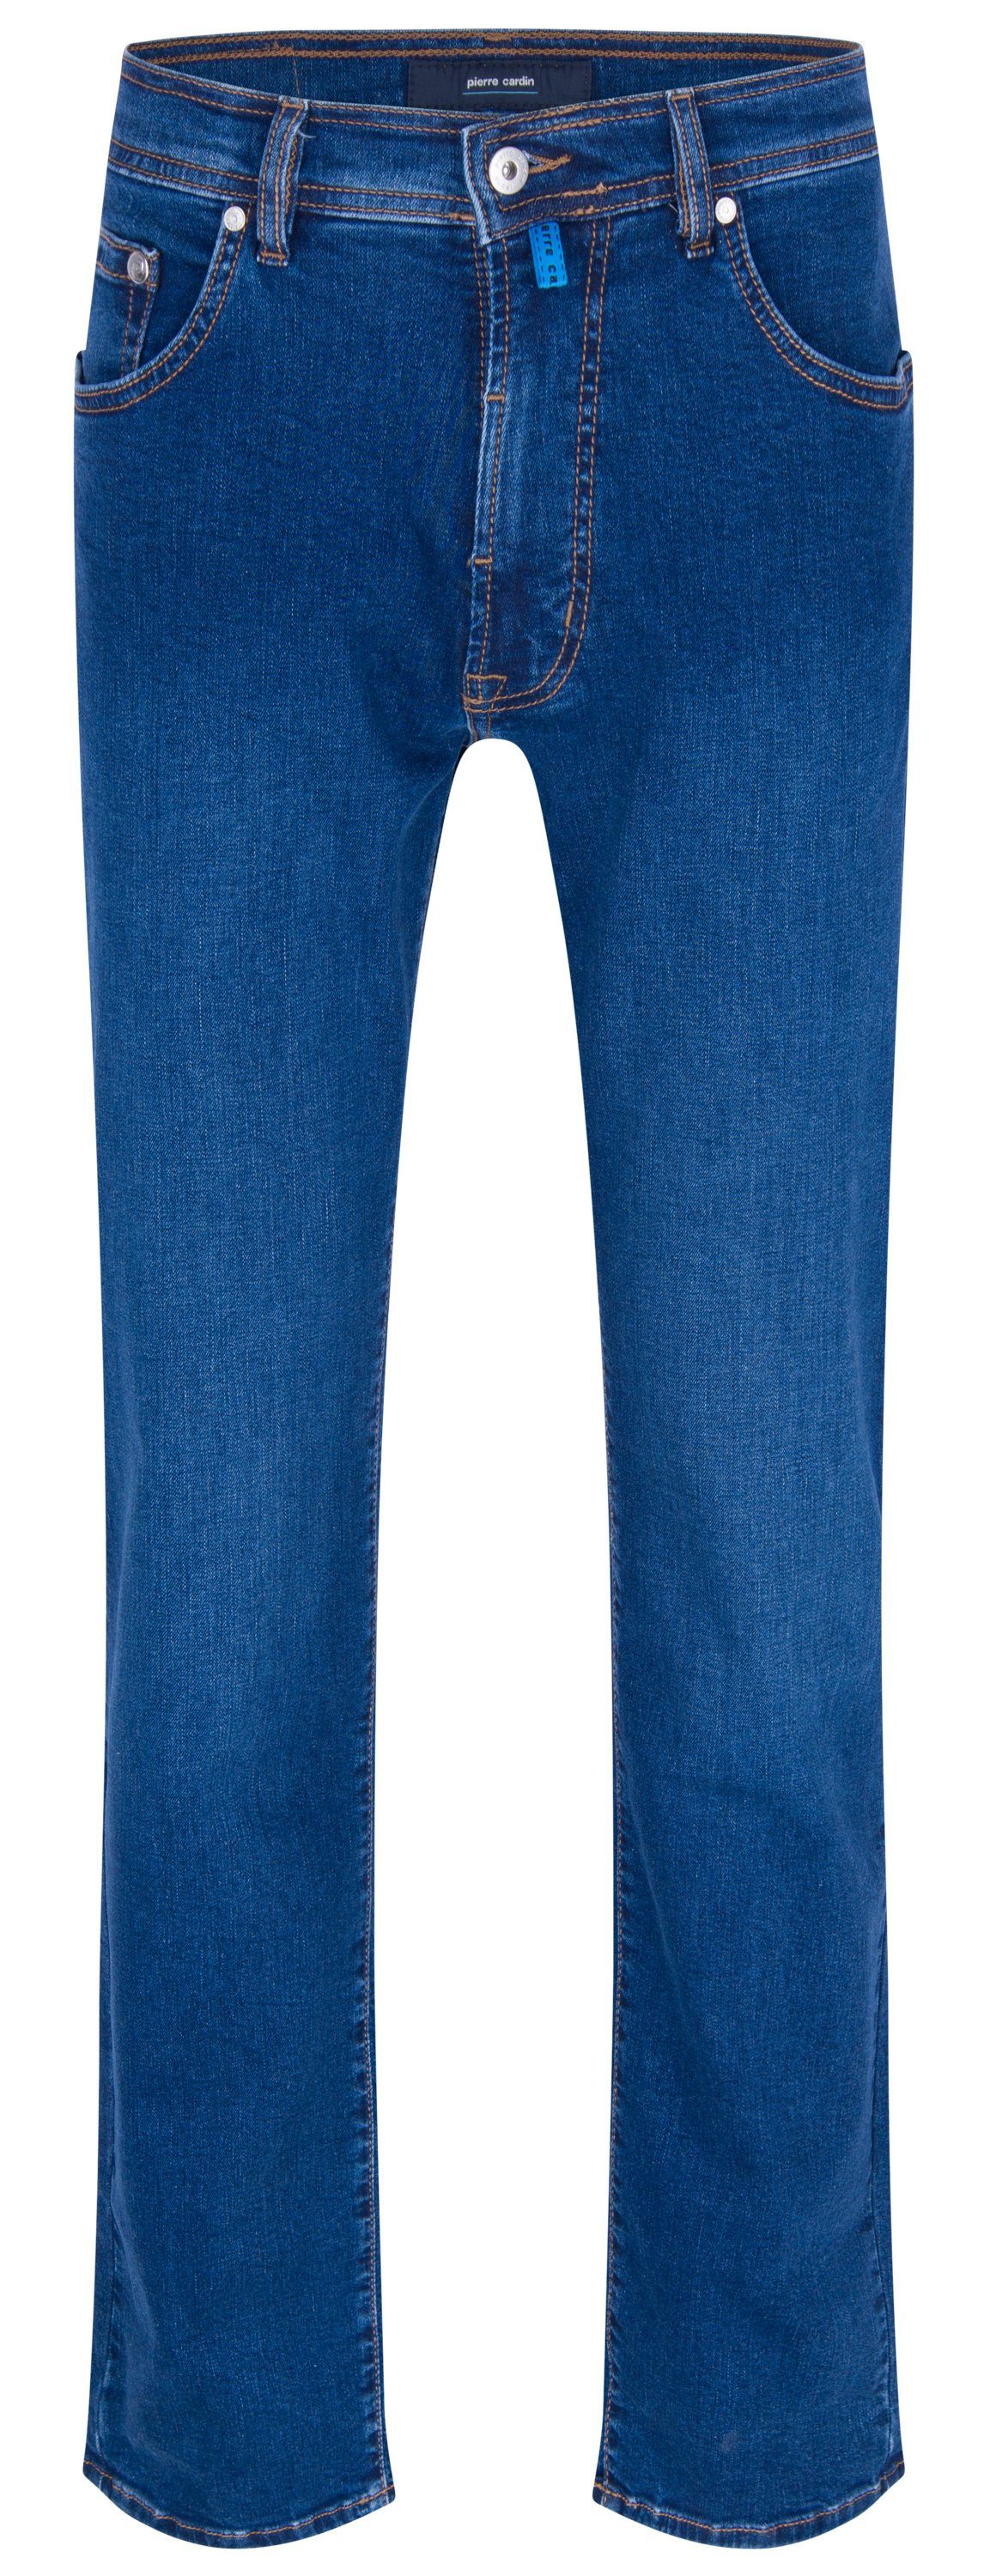 Pierre Cardin 5-Pocket-Jeans 7106.6822 used - DEAUVILLE CLIMA blue PIERRE CONTROL 31960 CARDIN